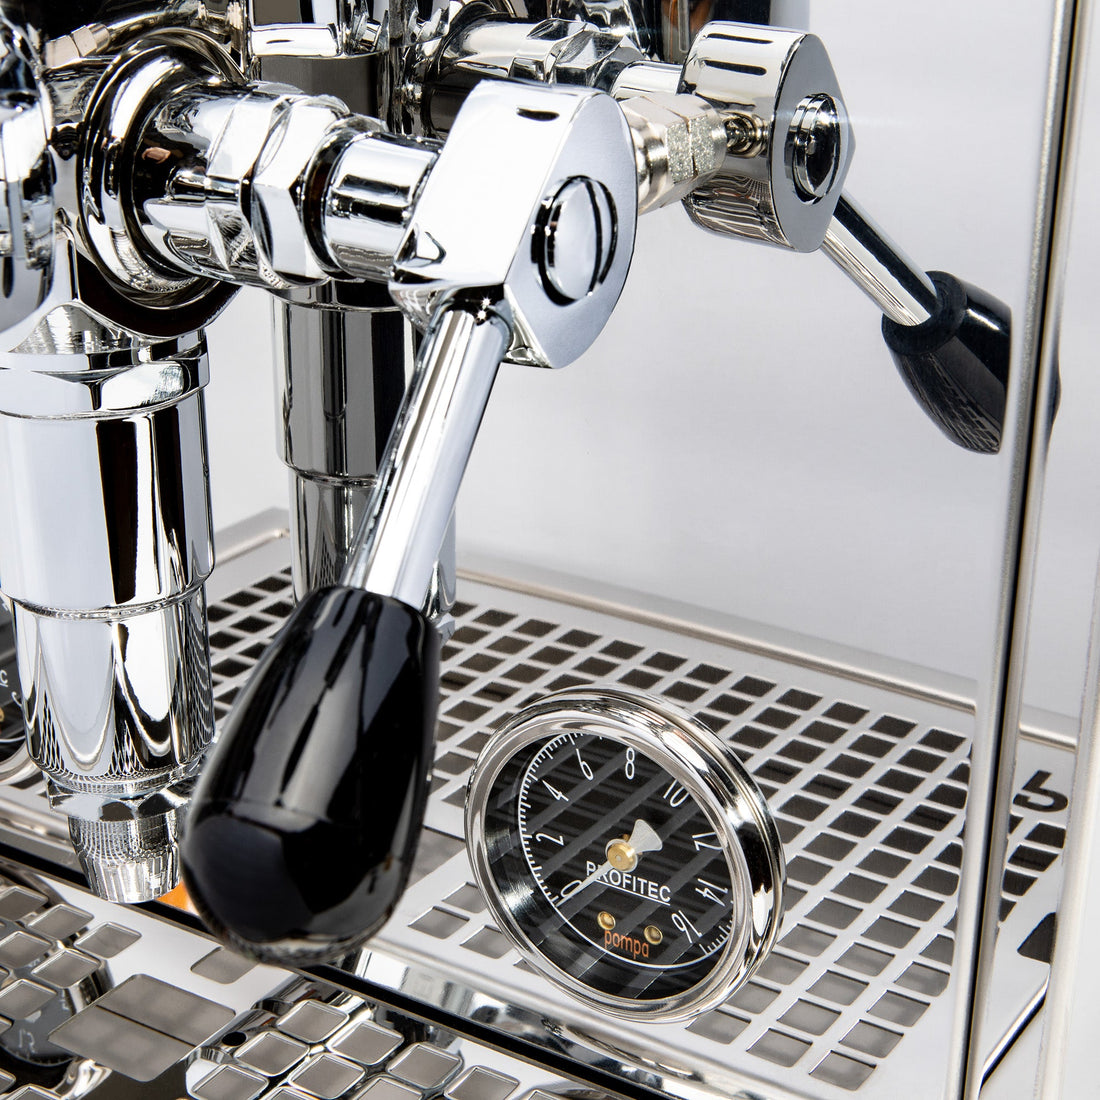 Profitec Pro 600 Dual Boiler Espresso Machine with Quick Steam Plus - Elm Carpathian Burl